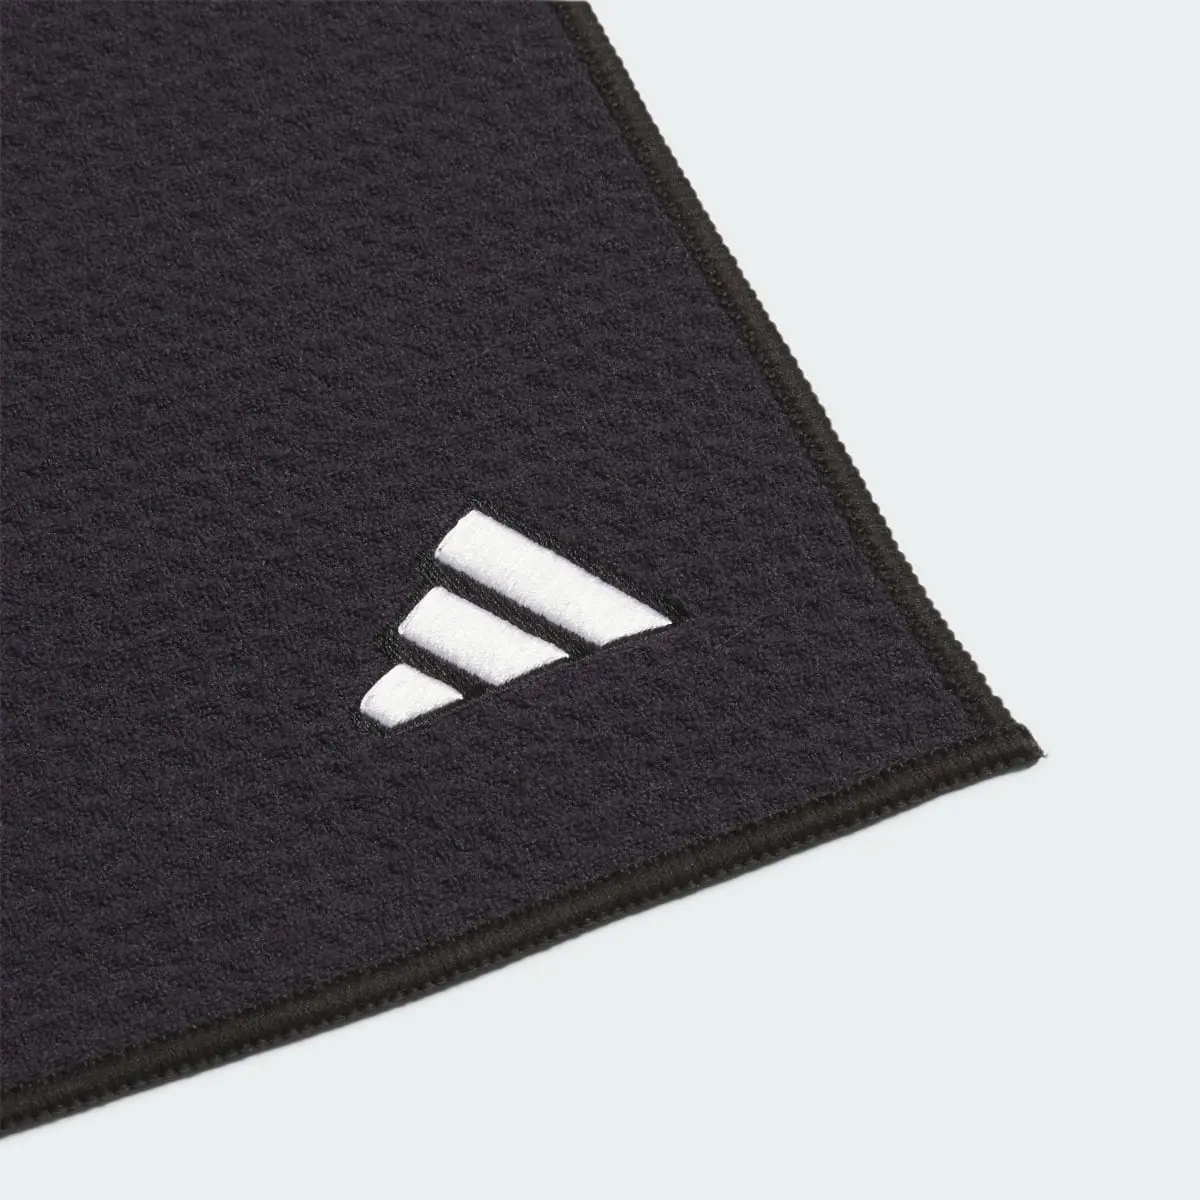 Adidas Microfiber Players Golf Towel. 3